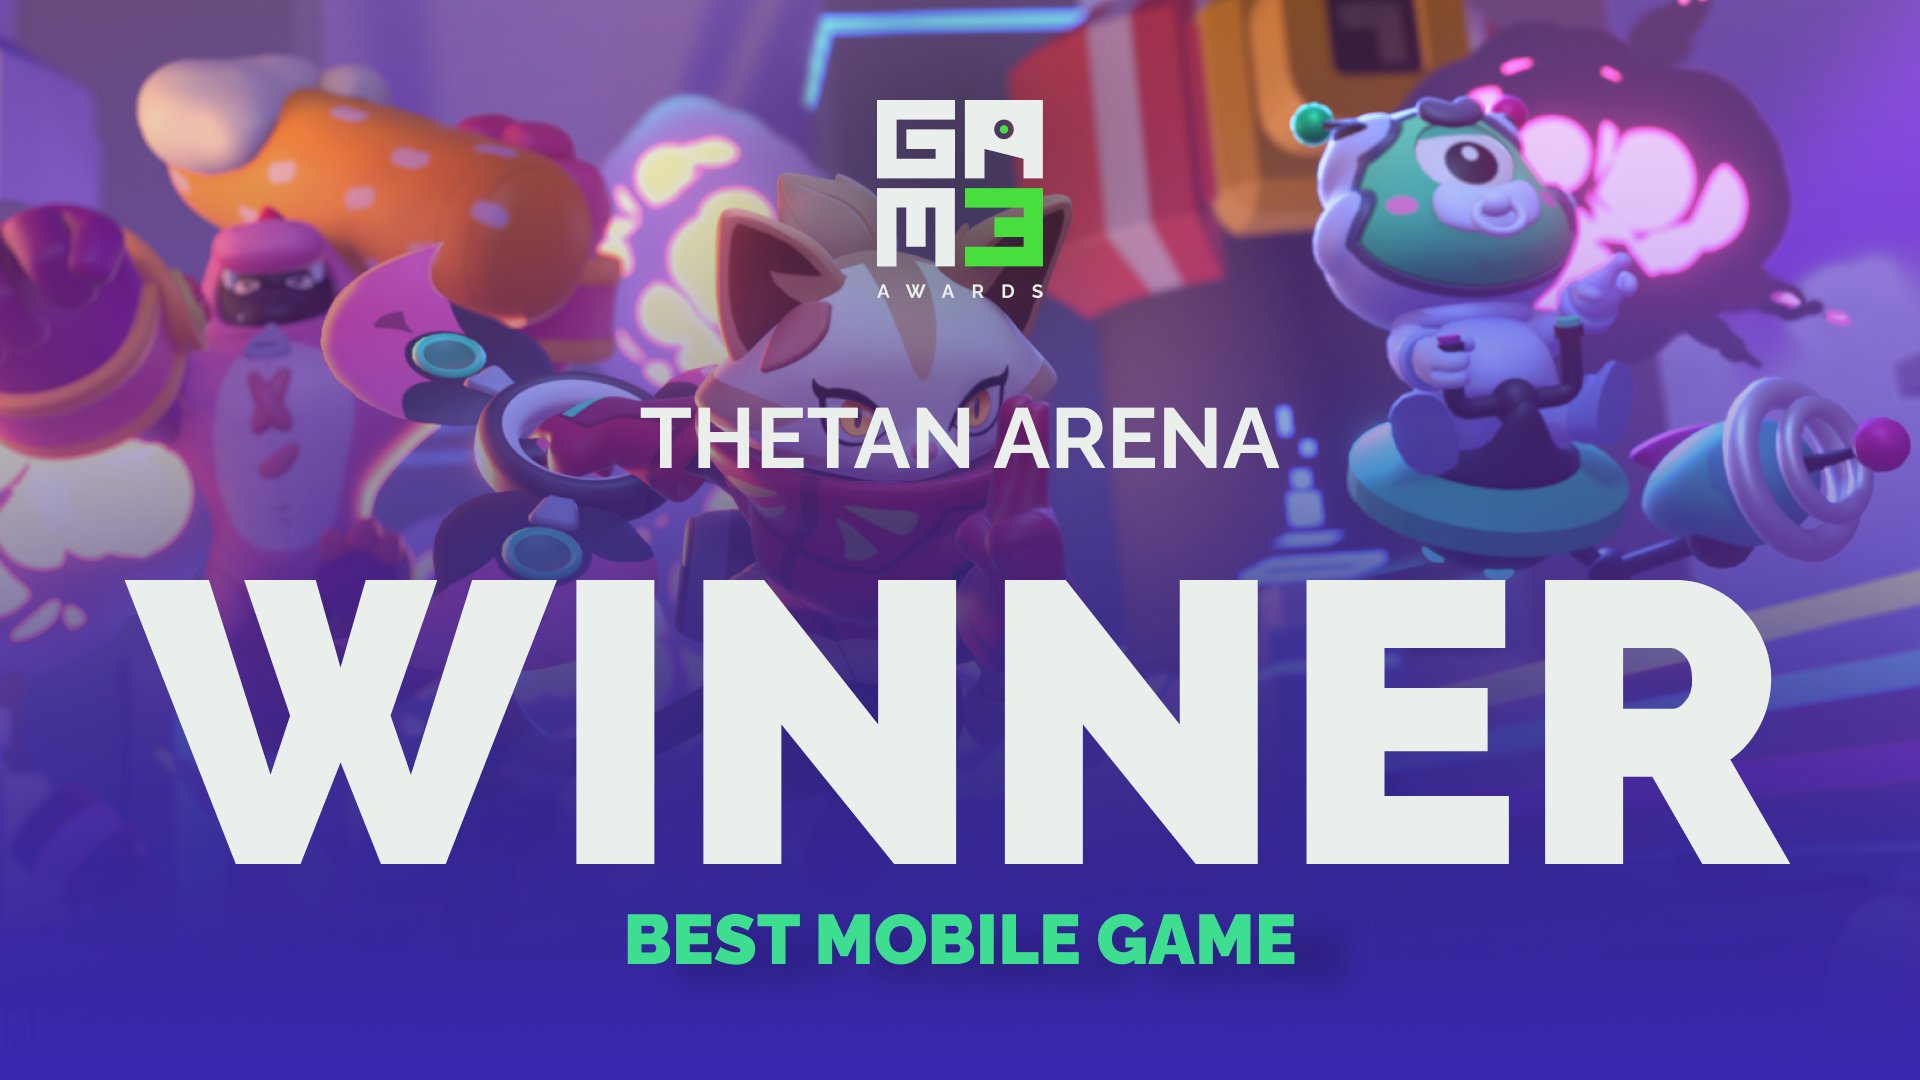 Thetan Arena Wins Best Mobile Game Award at GAM3 Awards 2022